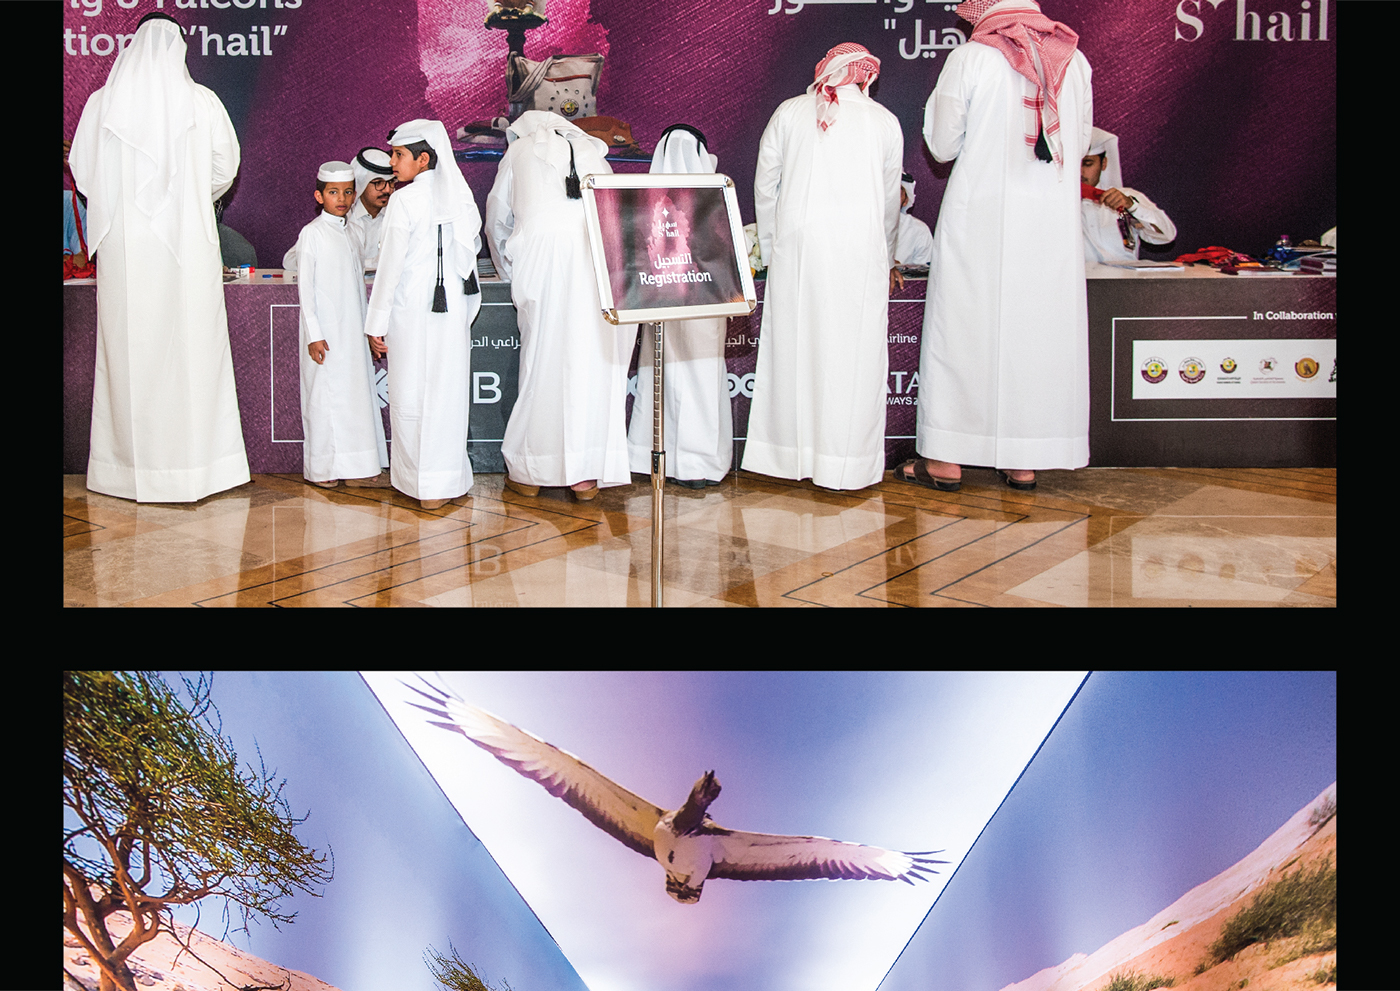 Qatar doha arabic katara S'hail Exhibition  alabady falcon falcons Hunting